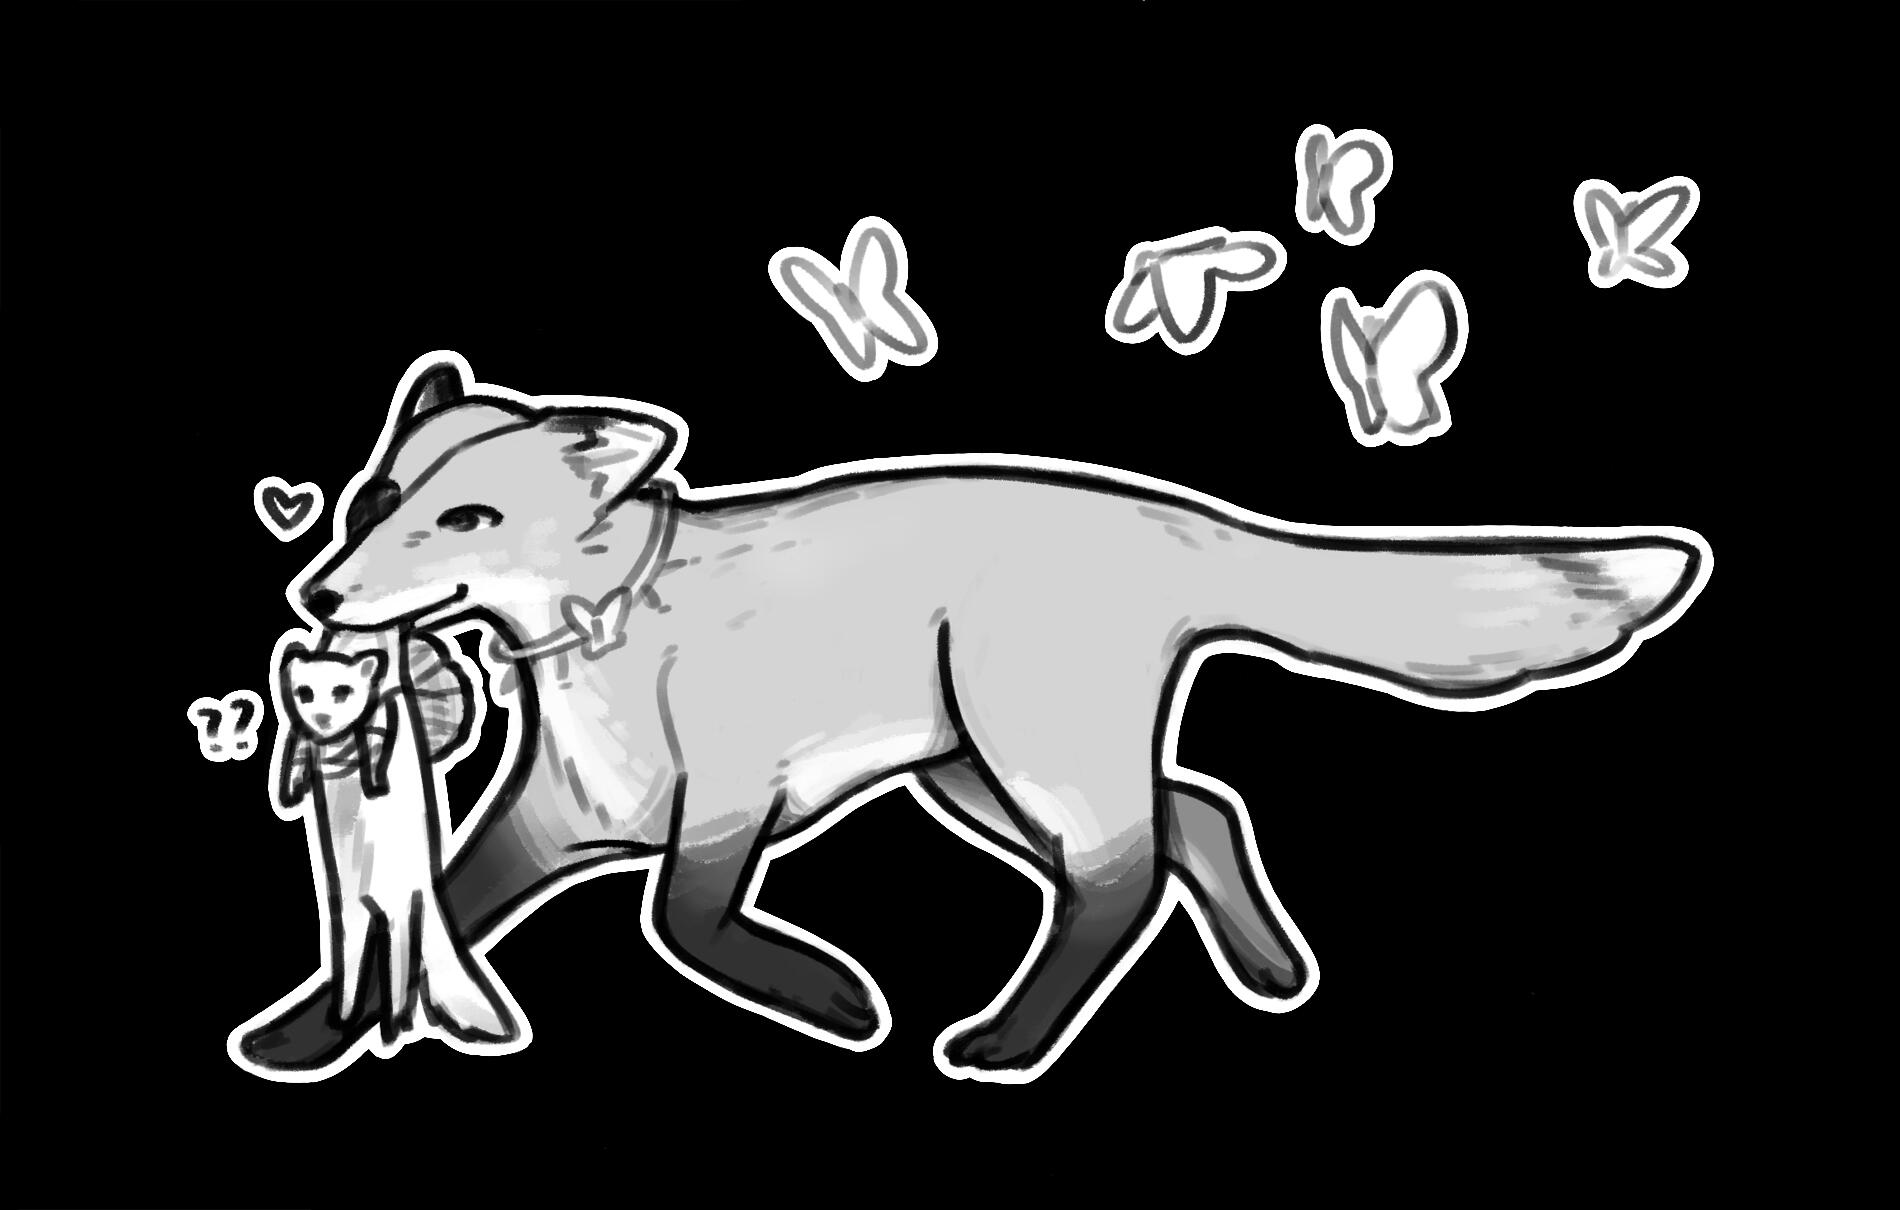 A digital drawing of Hua Cheng as a fox carrying Xie Lian as a ferret.